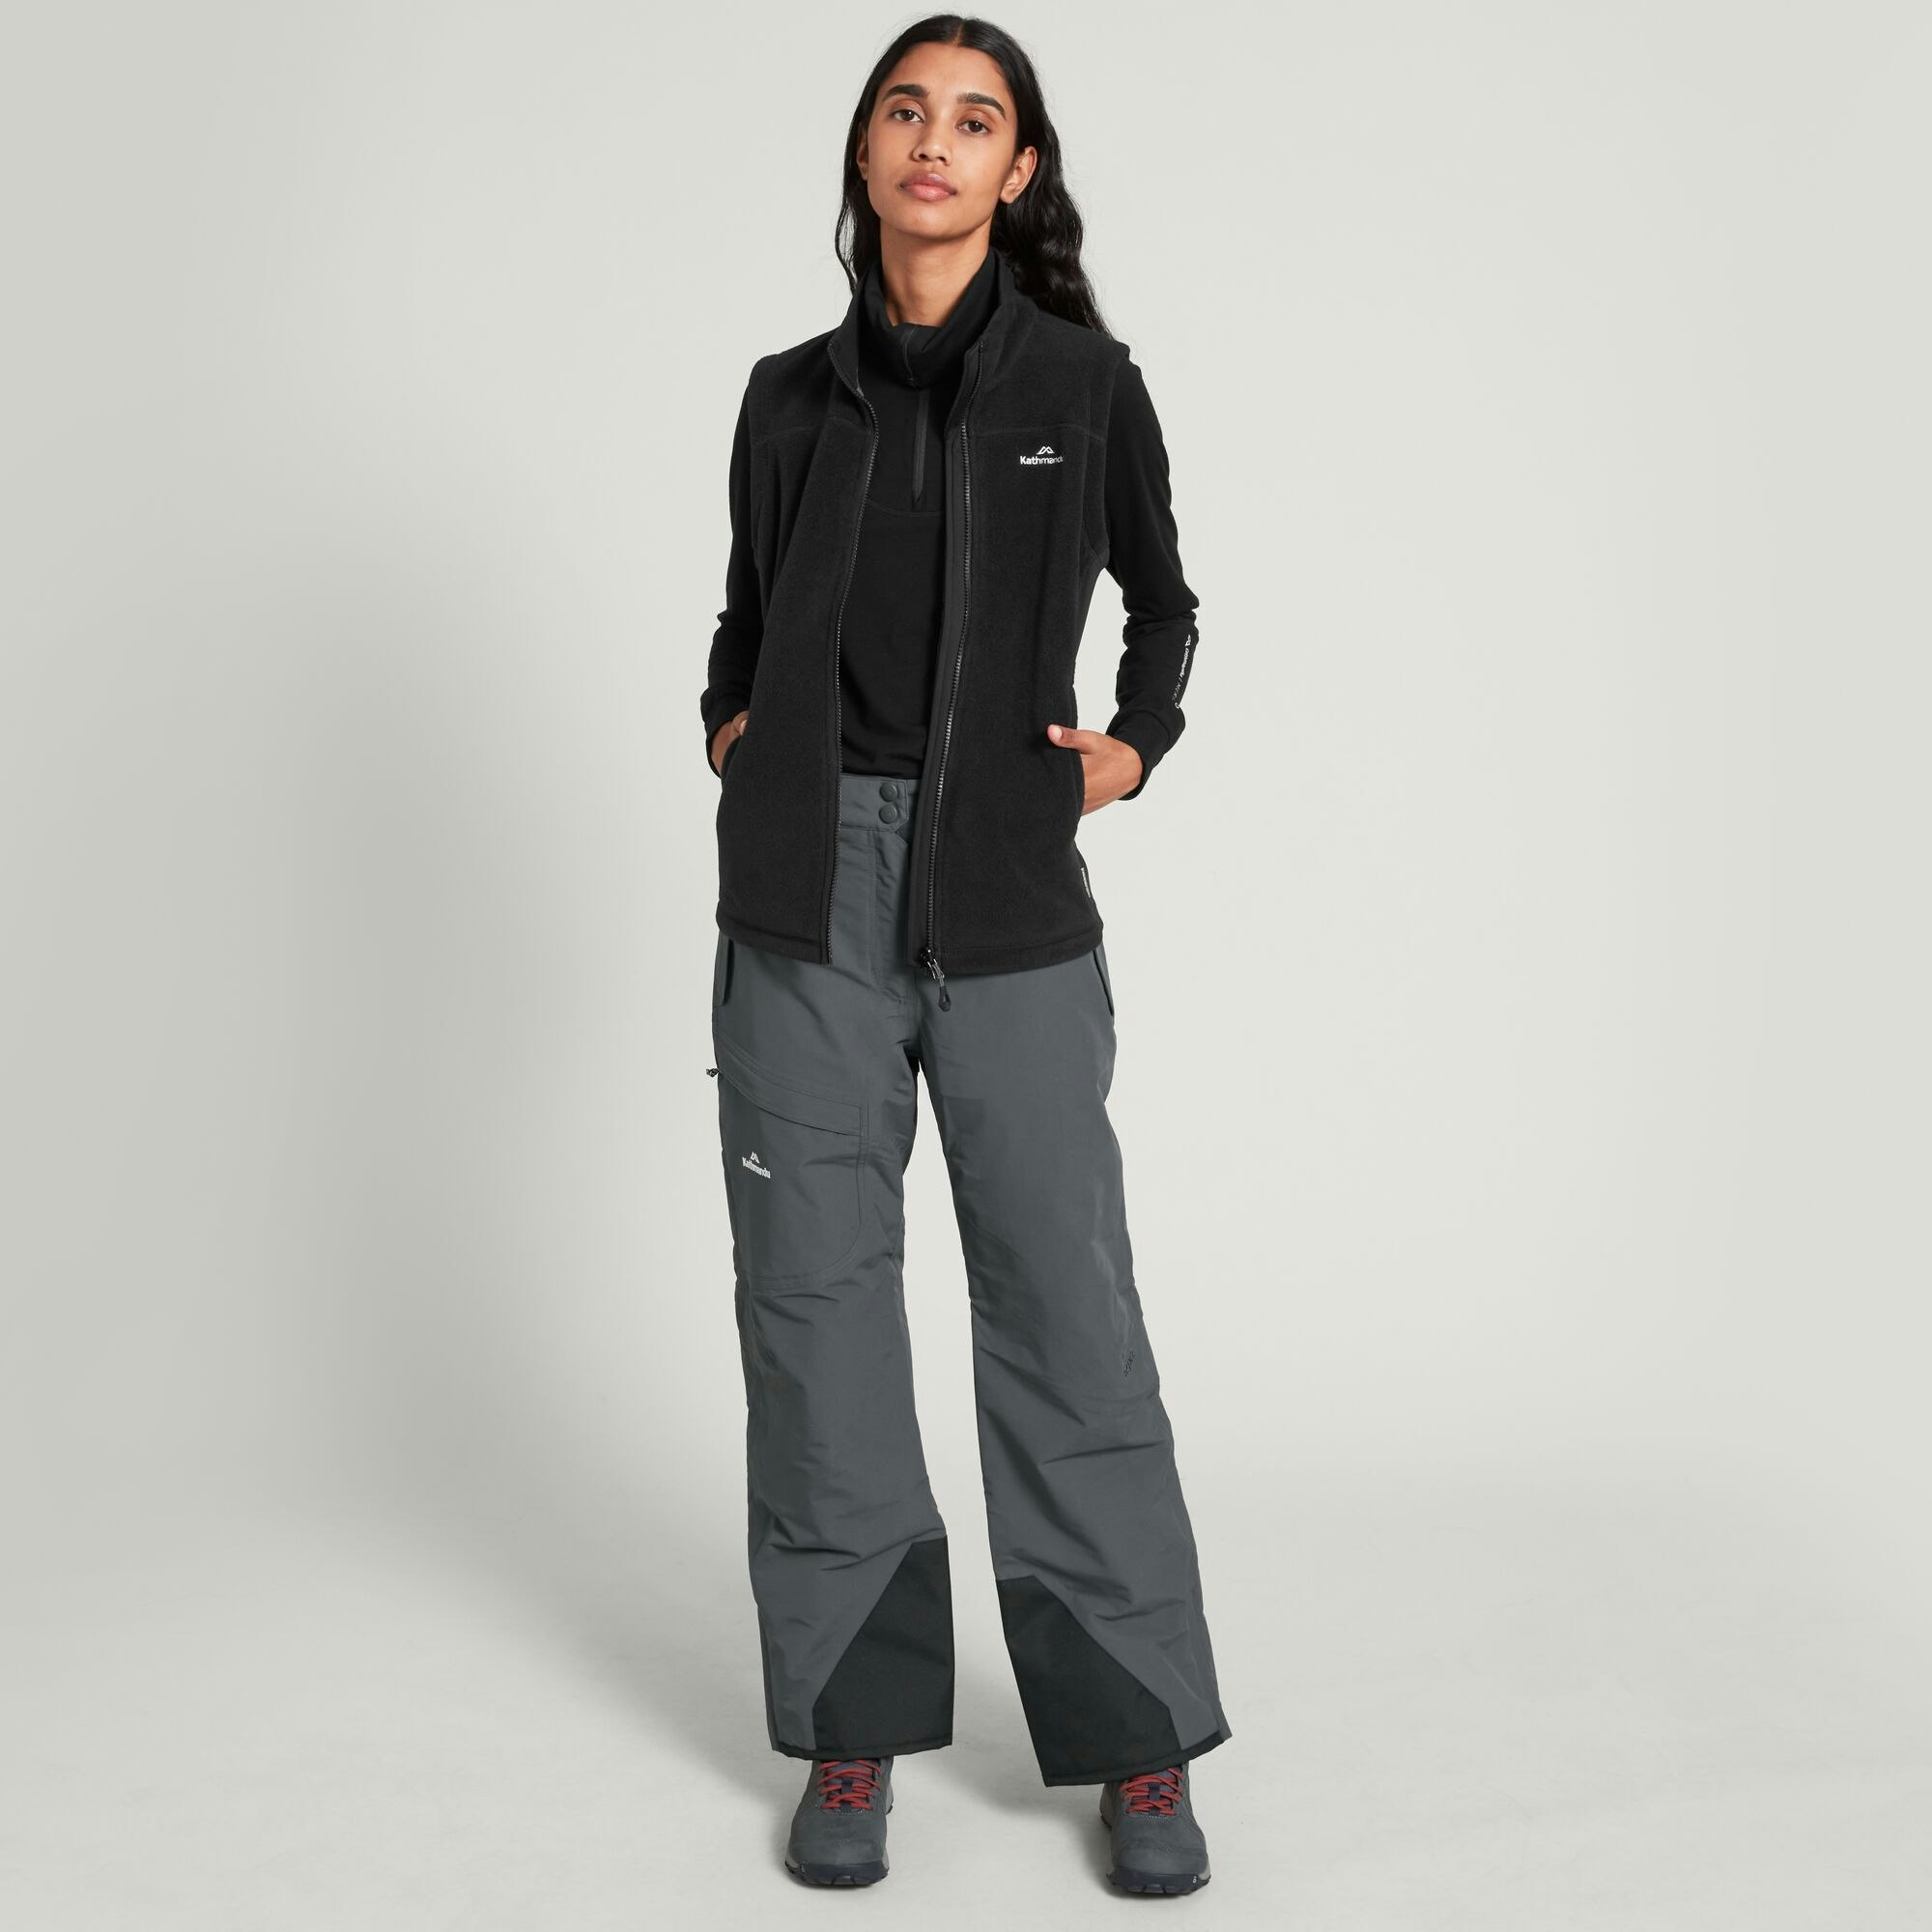 Women Pants Stretchy Strong Zipper Sport Pants Lint Free Anti-wear Dark  Khaki S at Amazon Women's Clothing store